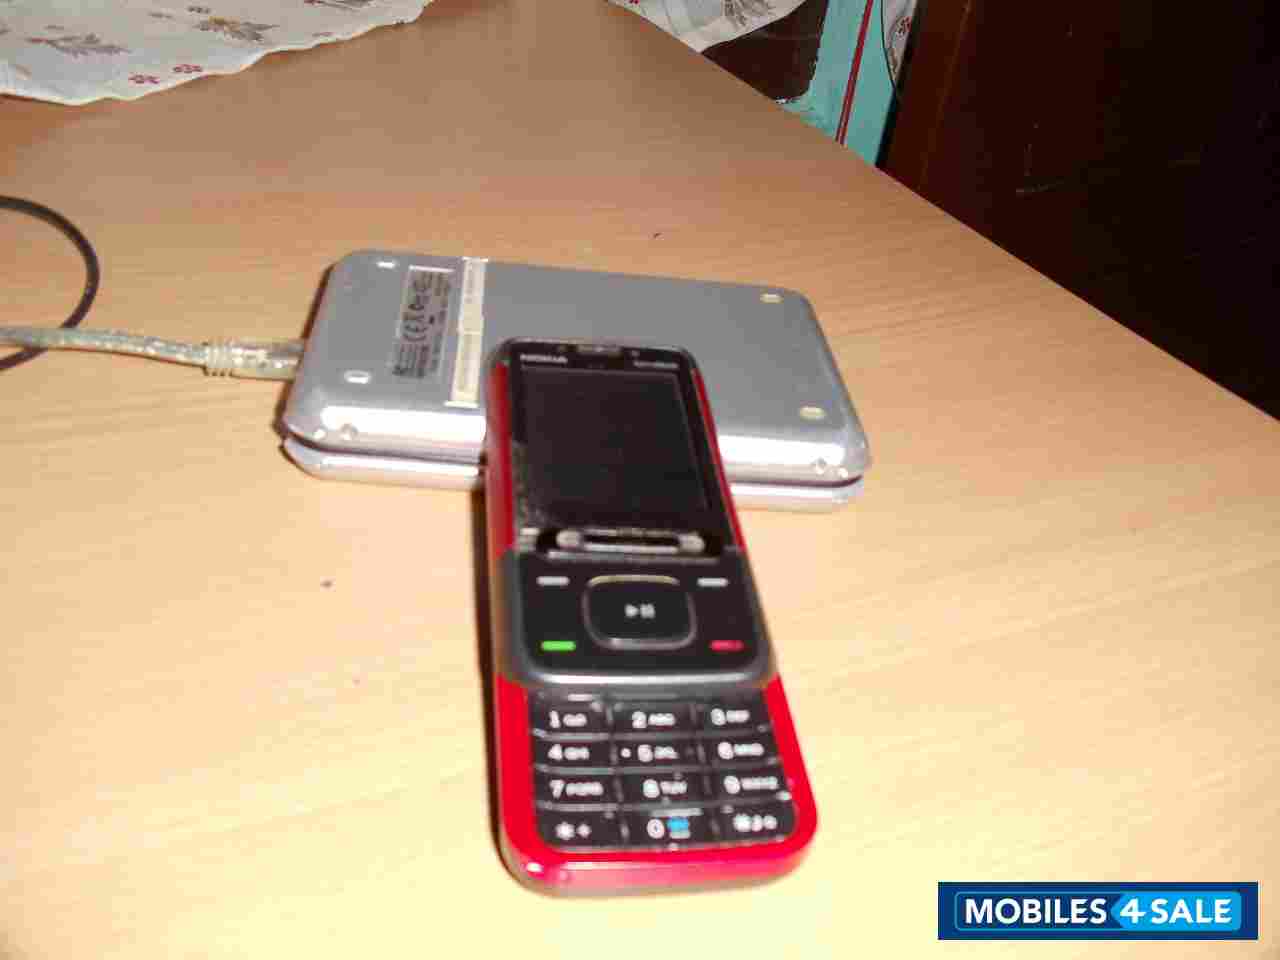 Red+black Nokia XpressMusic 5610